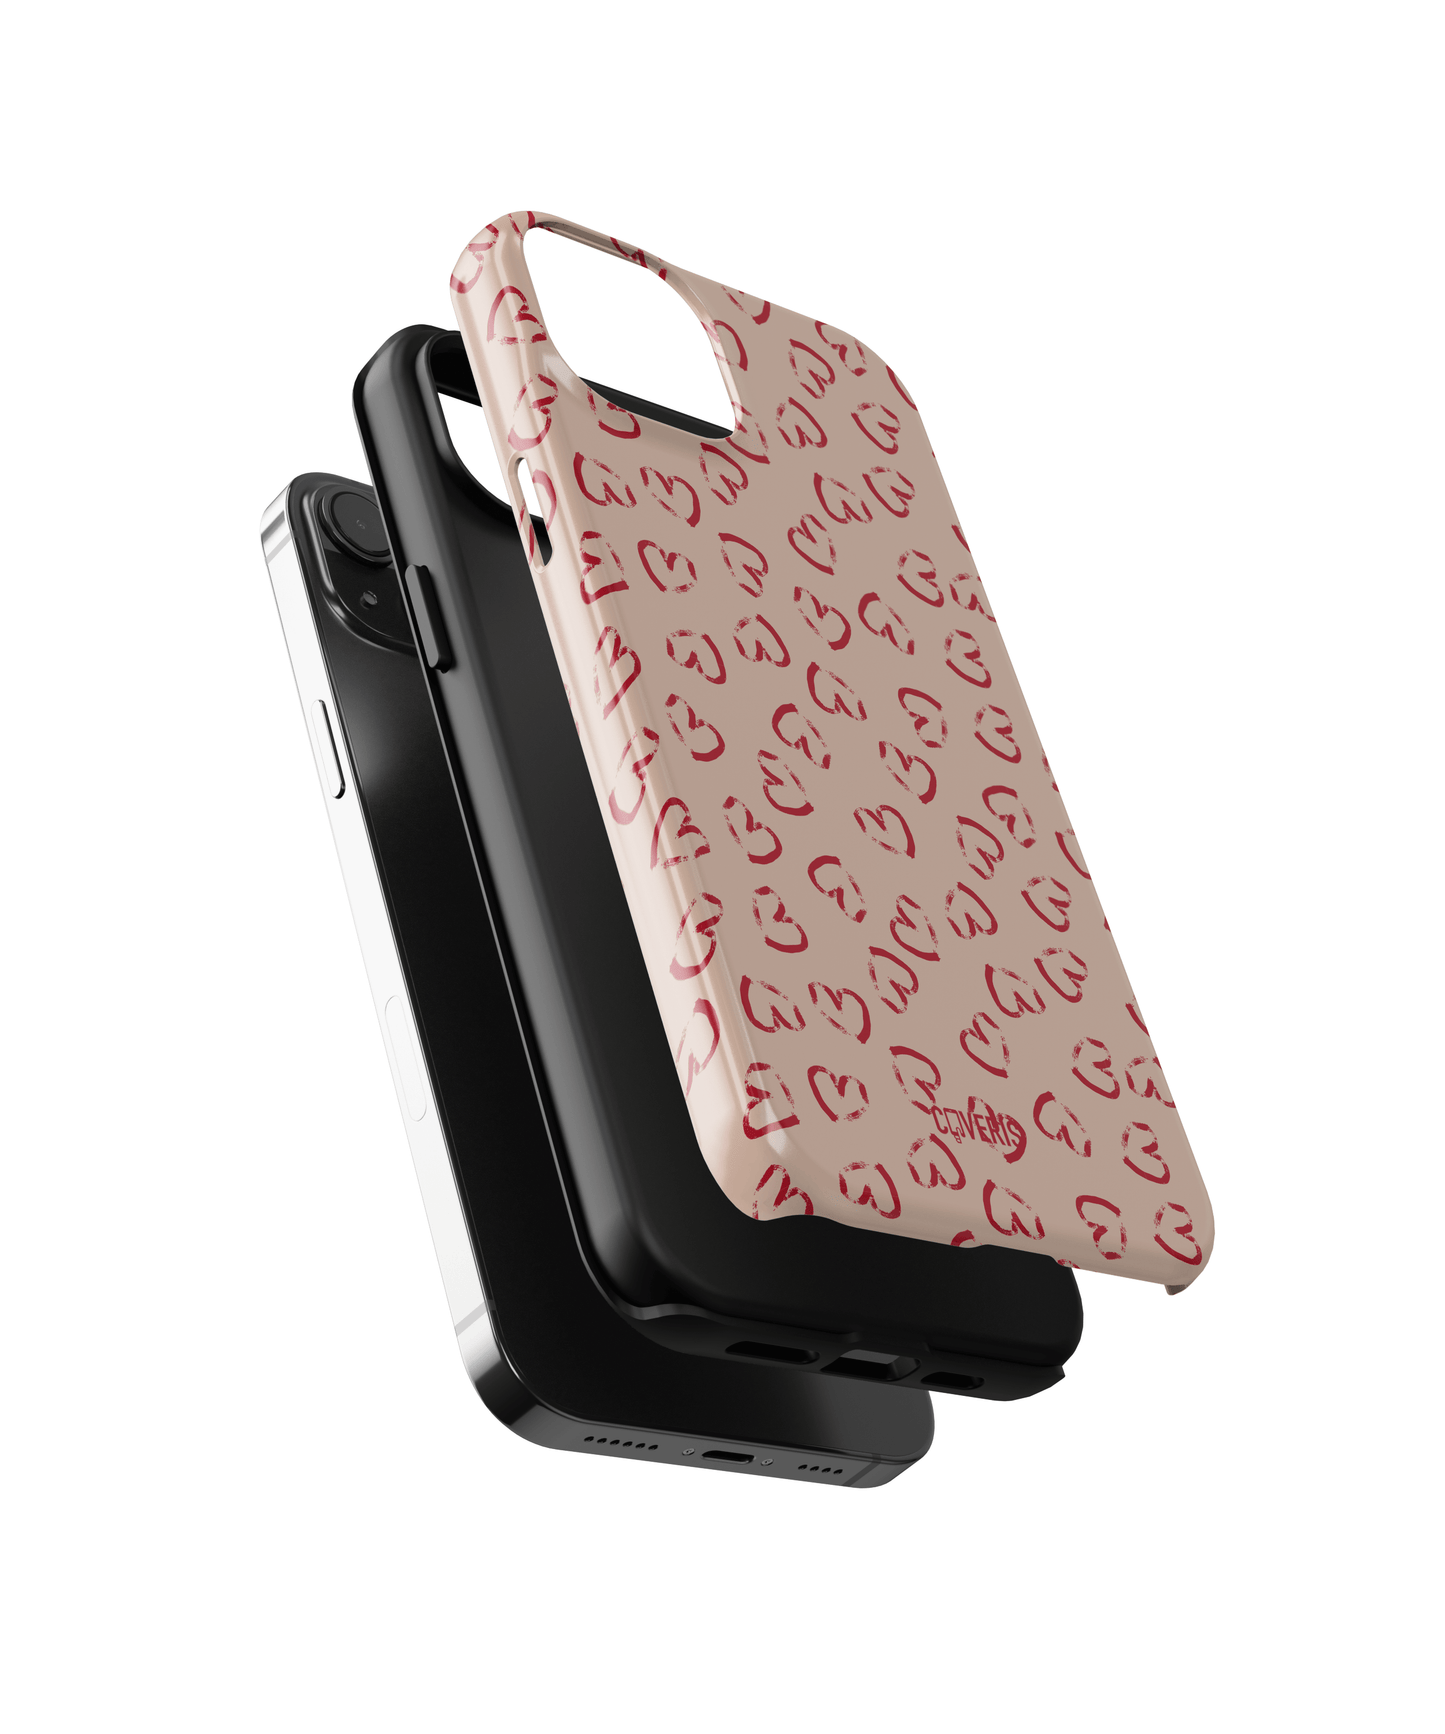 Sweetness - iPhone SE (2016) phone case